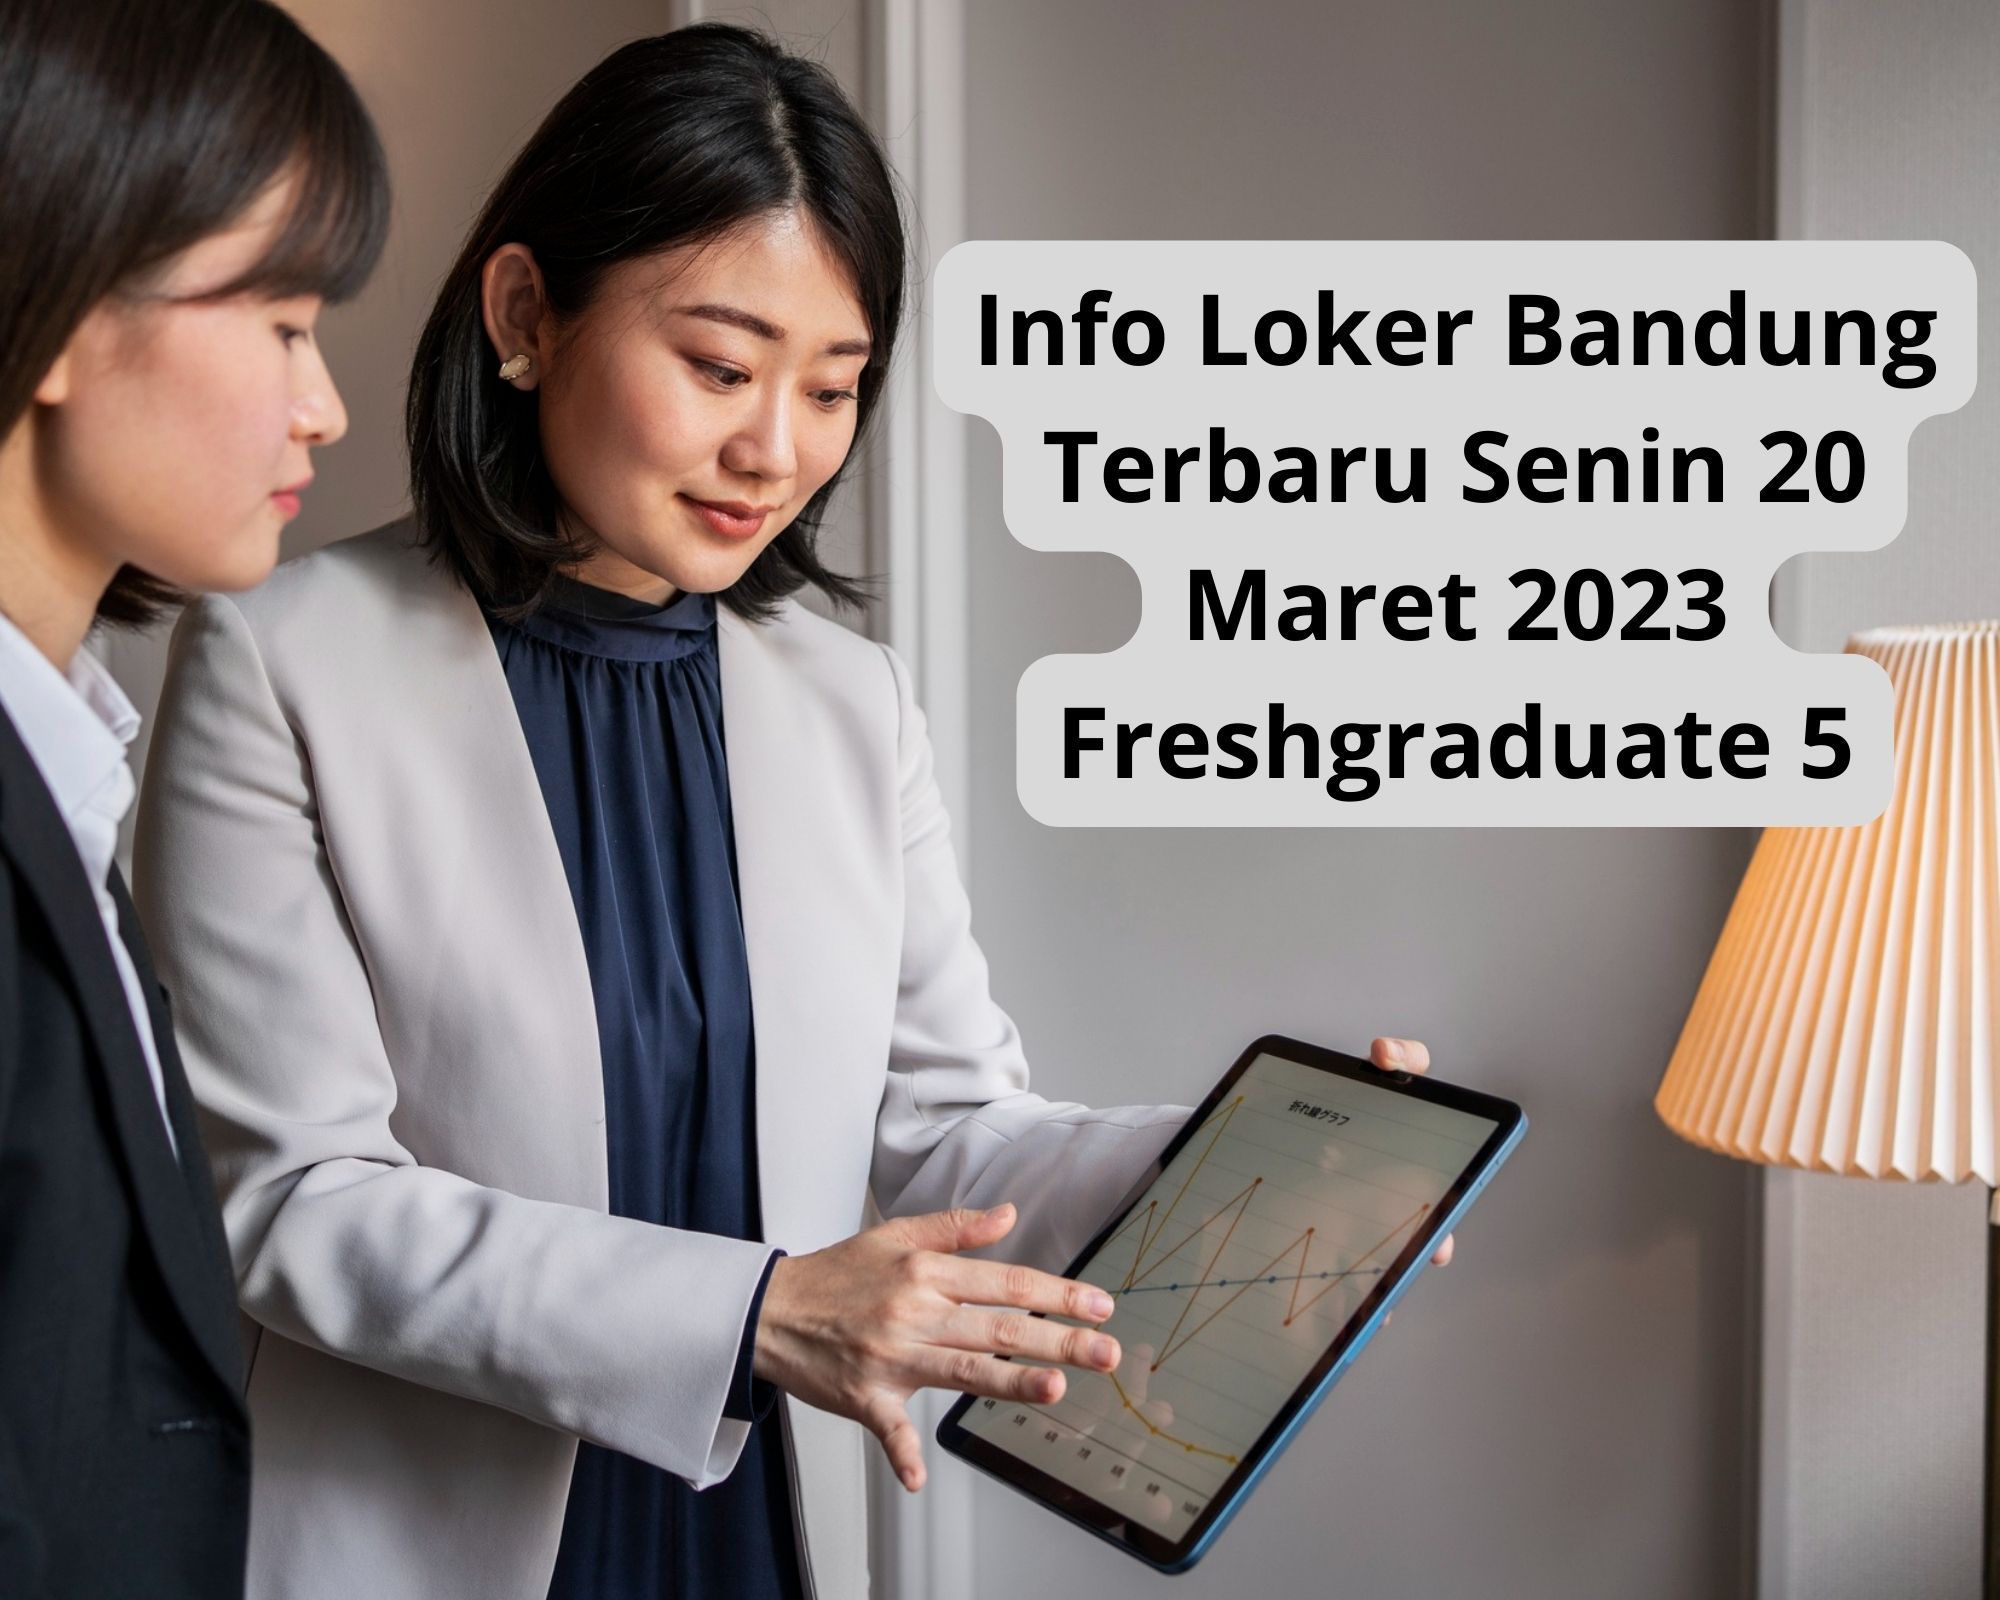 Info Loker Bandung Terbaru Senin 20 Maret 2023 Freshgraduate 5